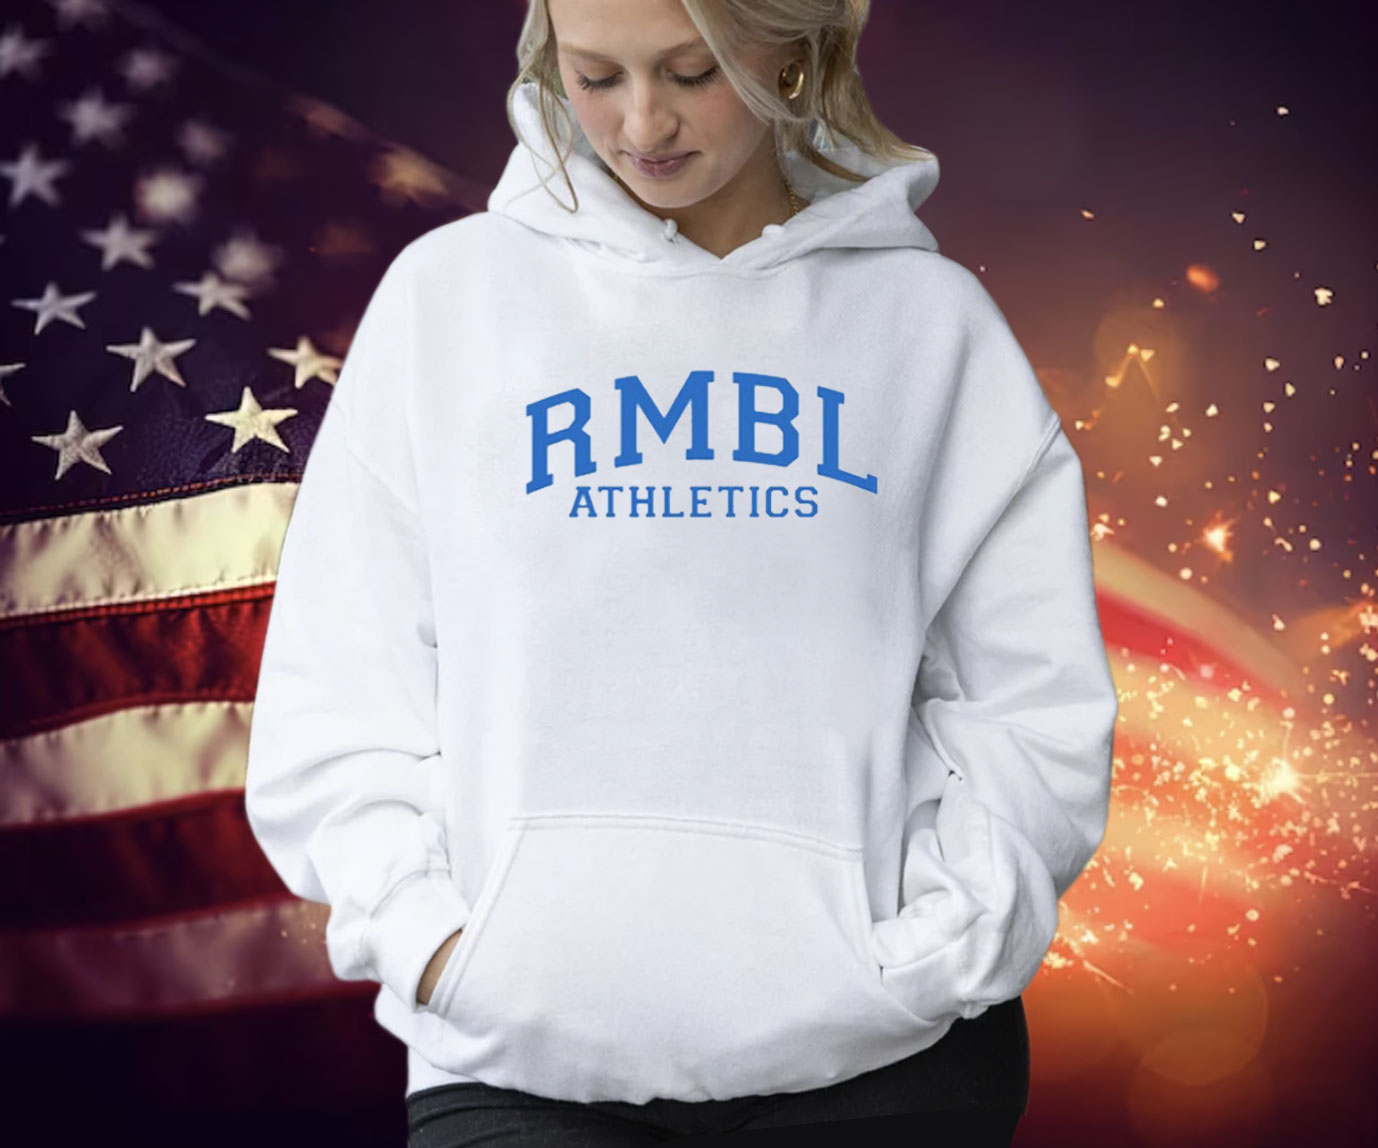 Rmbl Athletics Shirt